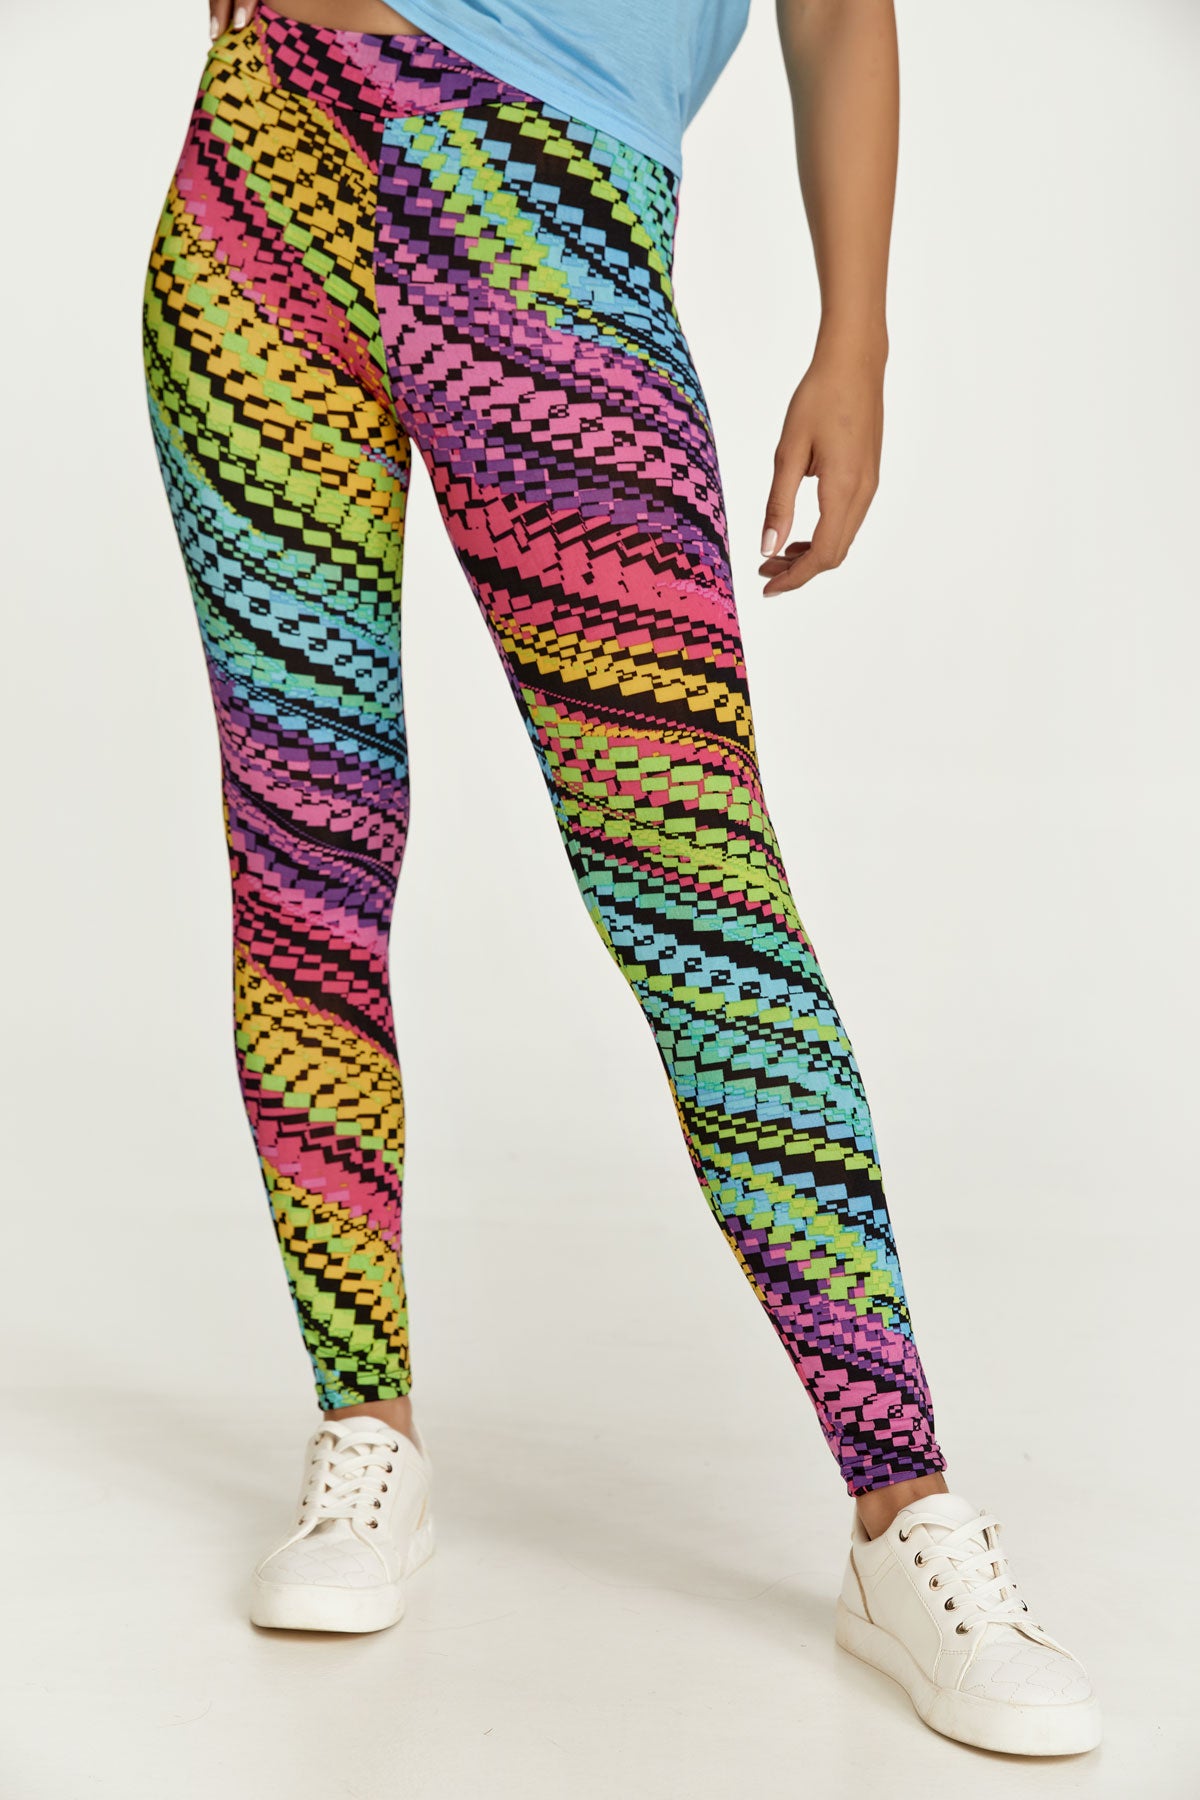 Multicolor Leggings - Buy Multicolor Leggings Online Starting at Just ₹218